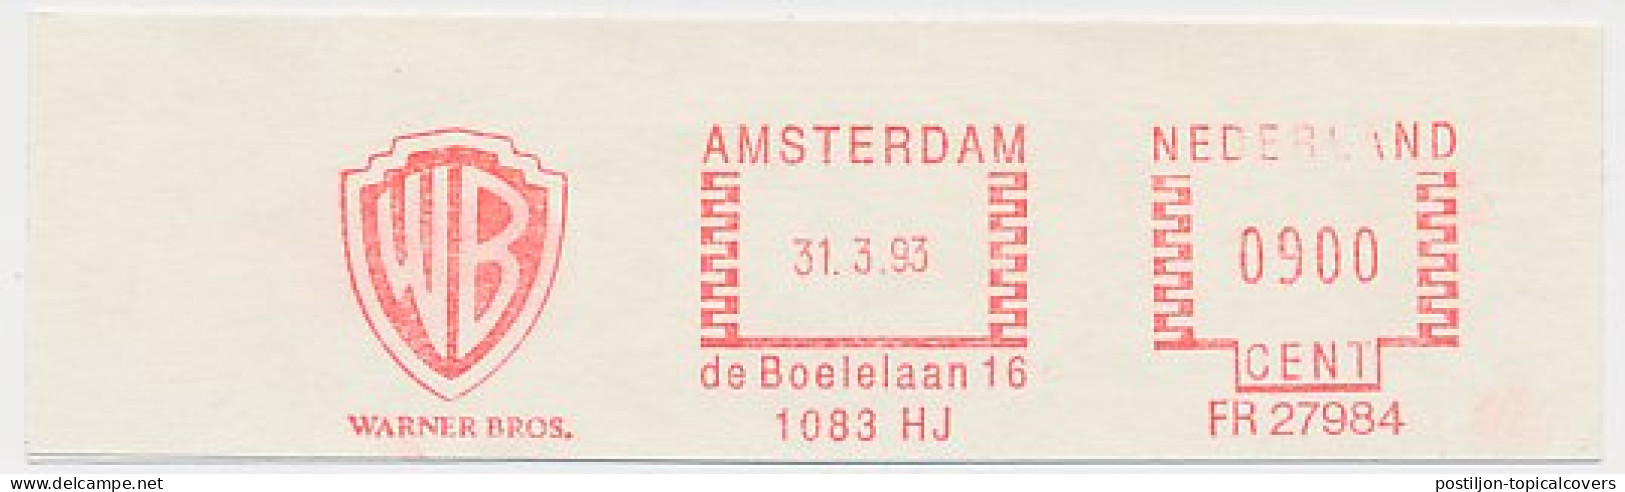 Meter Cut Netherlands 1993 - Frama 27984 Warner Bros. - Cinema